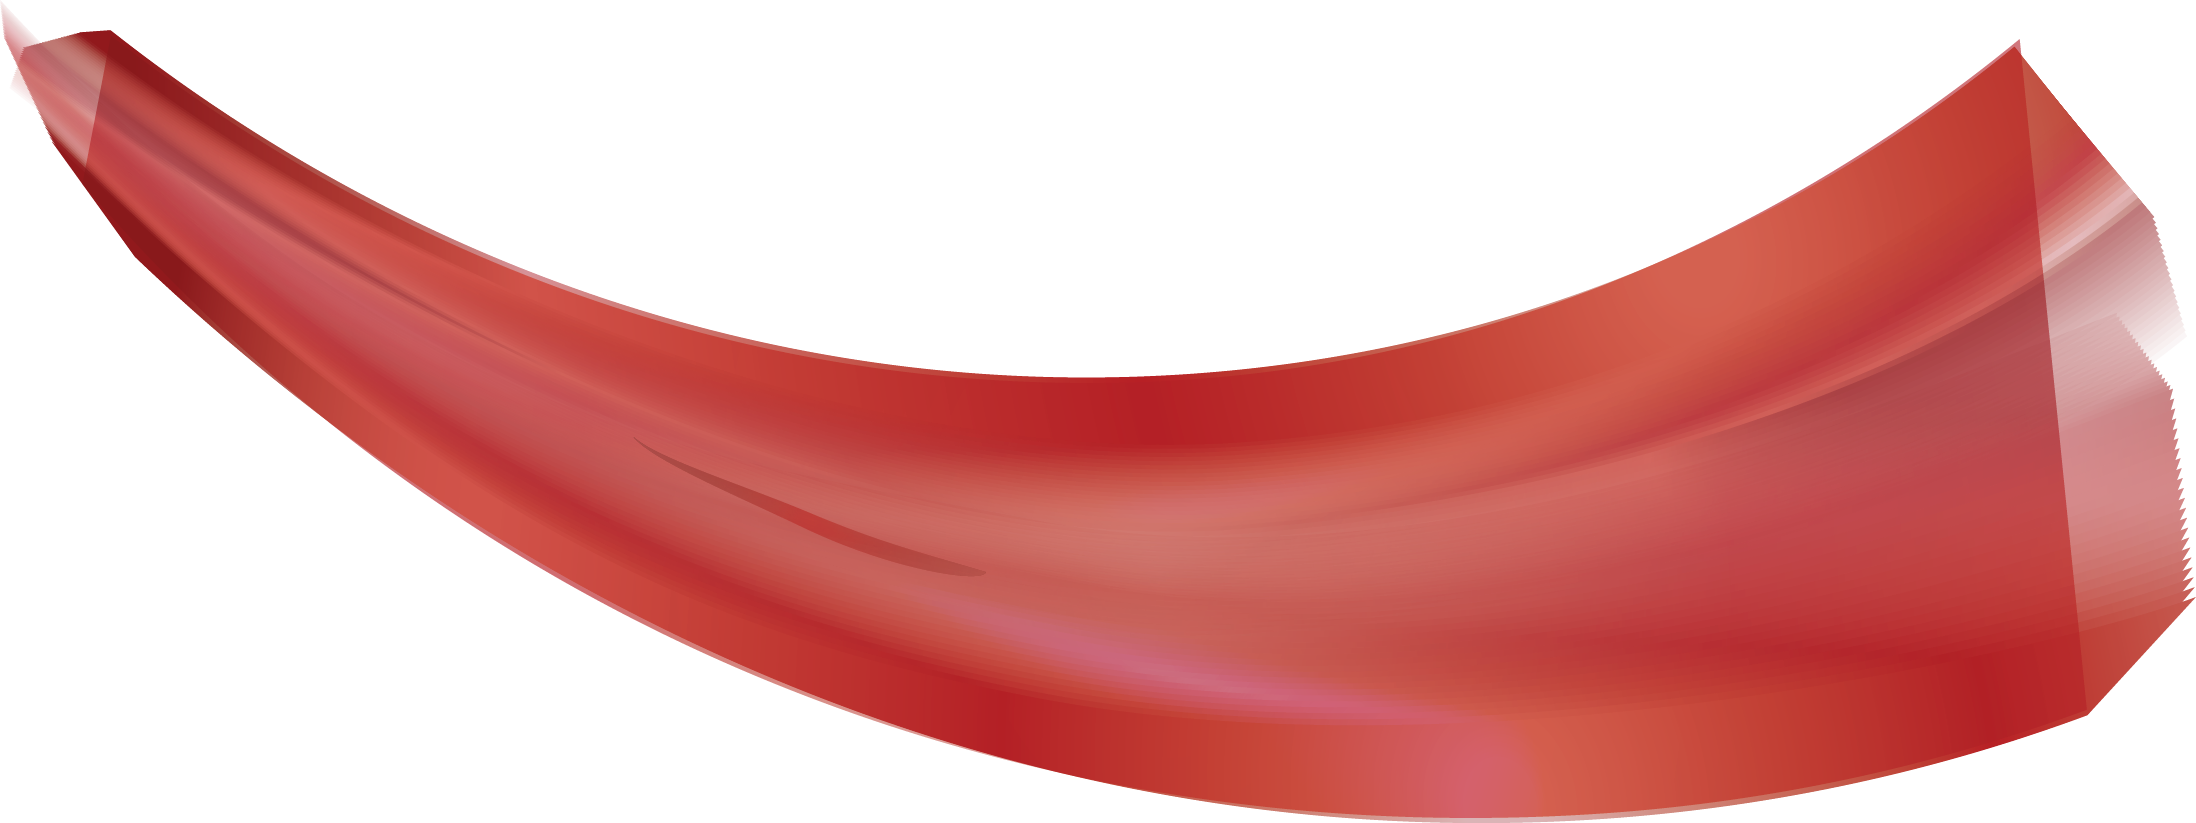 Red Wave PNG-Bild